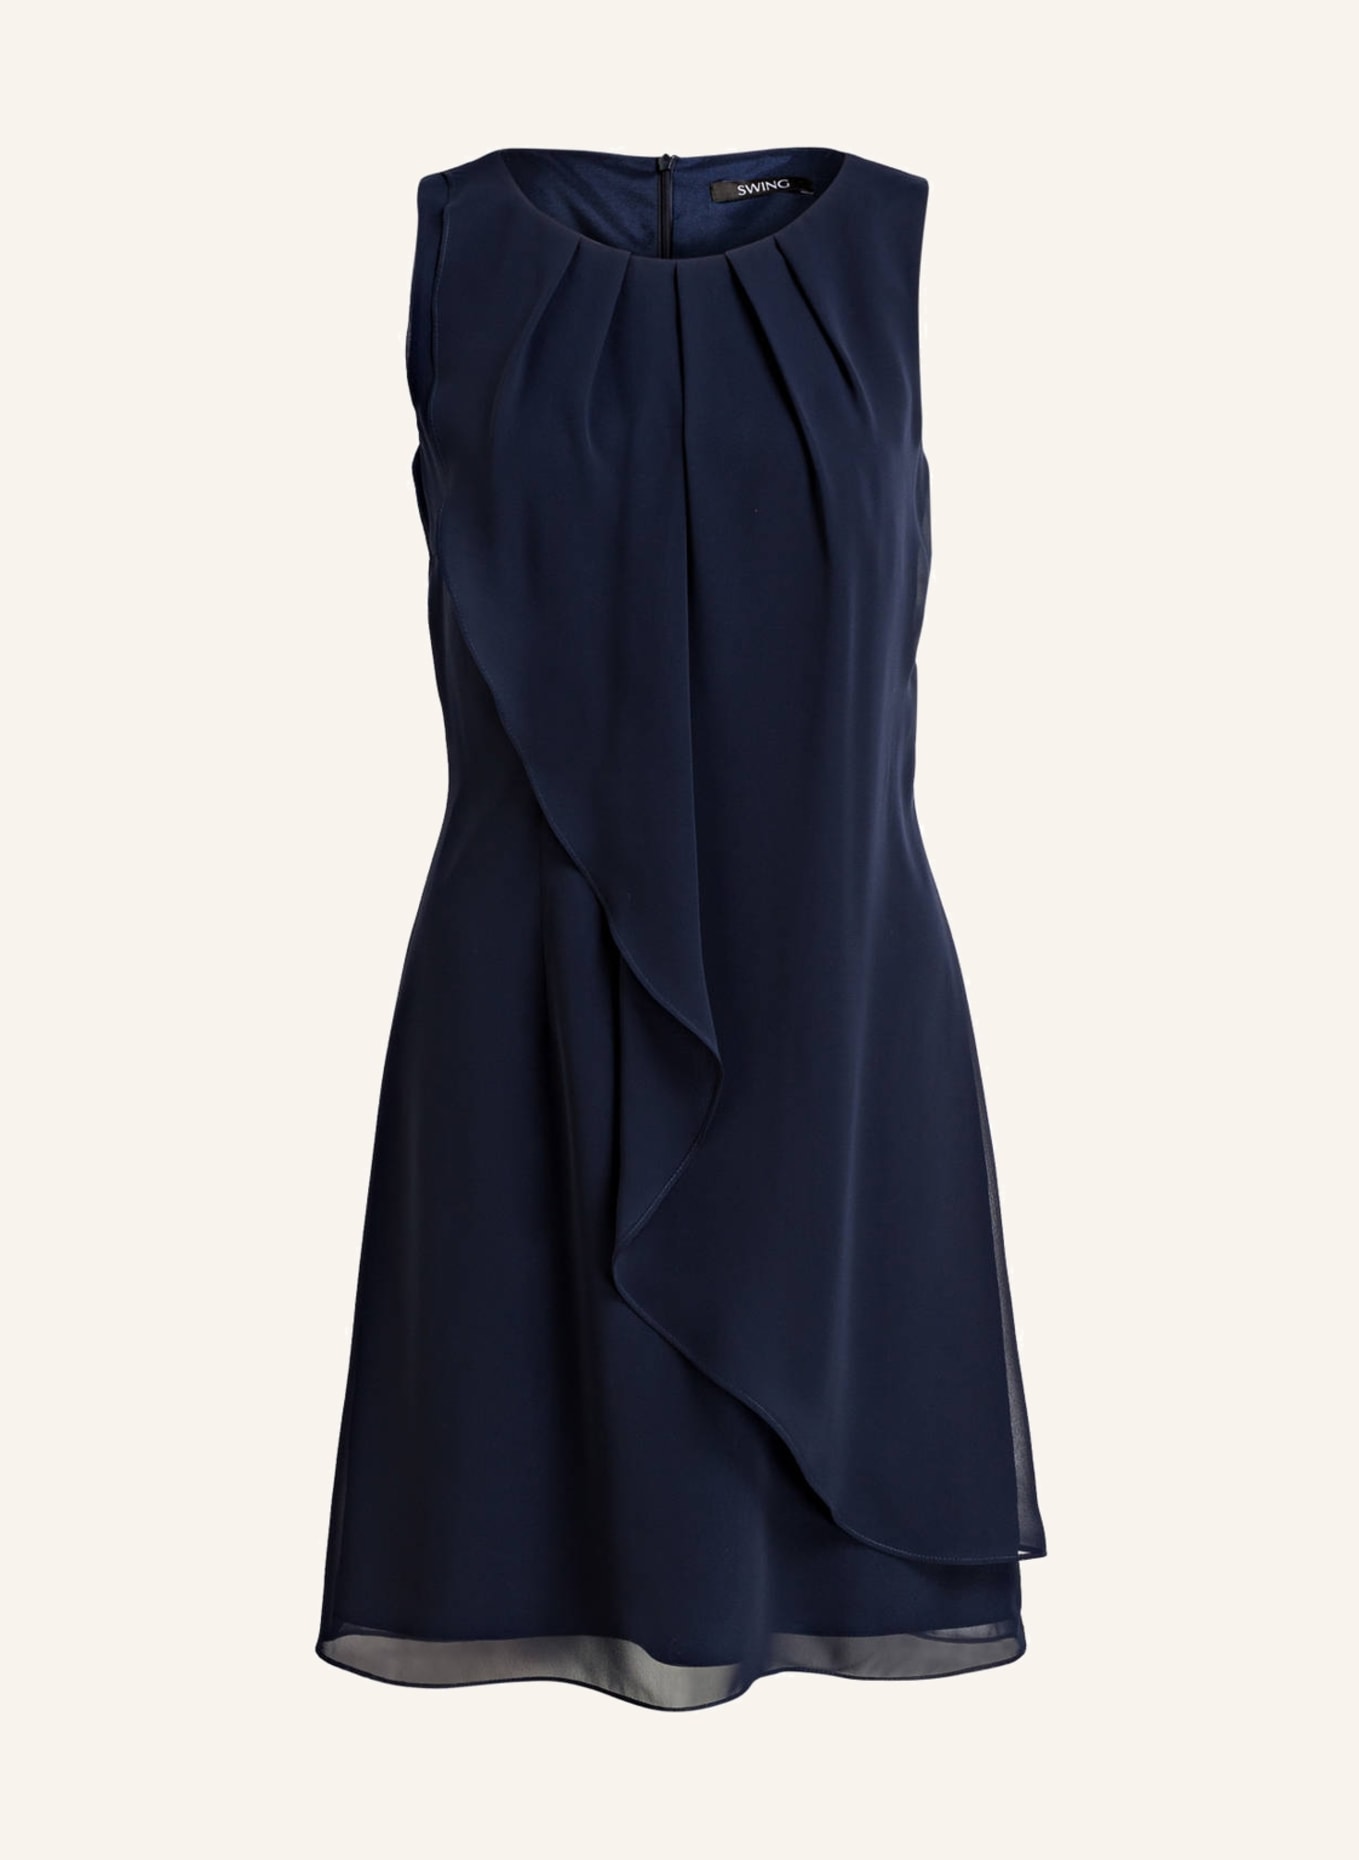 SWING Kleid, Farbe: DUNKELBLAU (Bild 1)